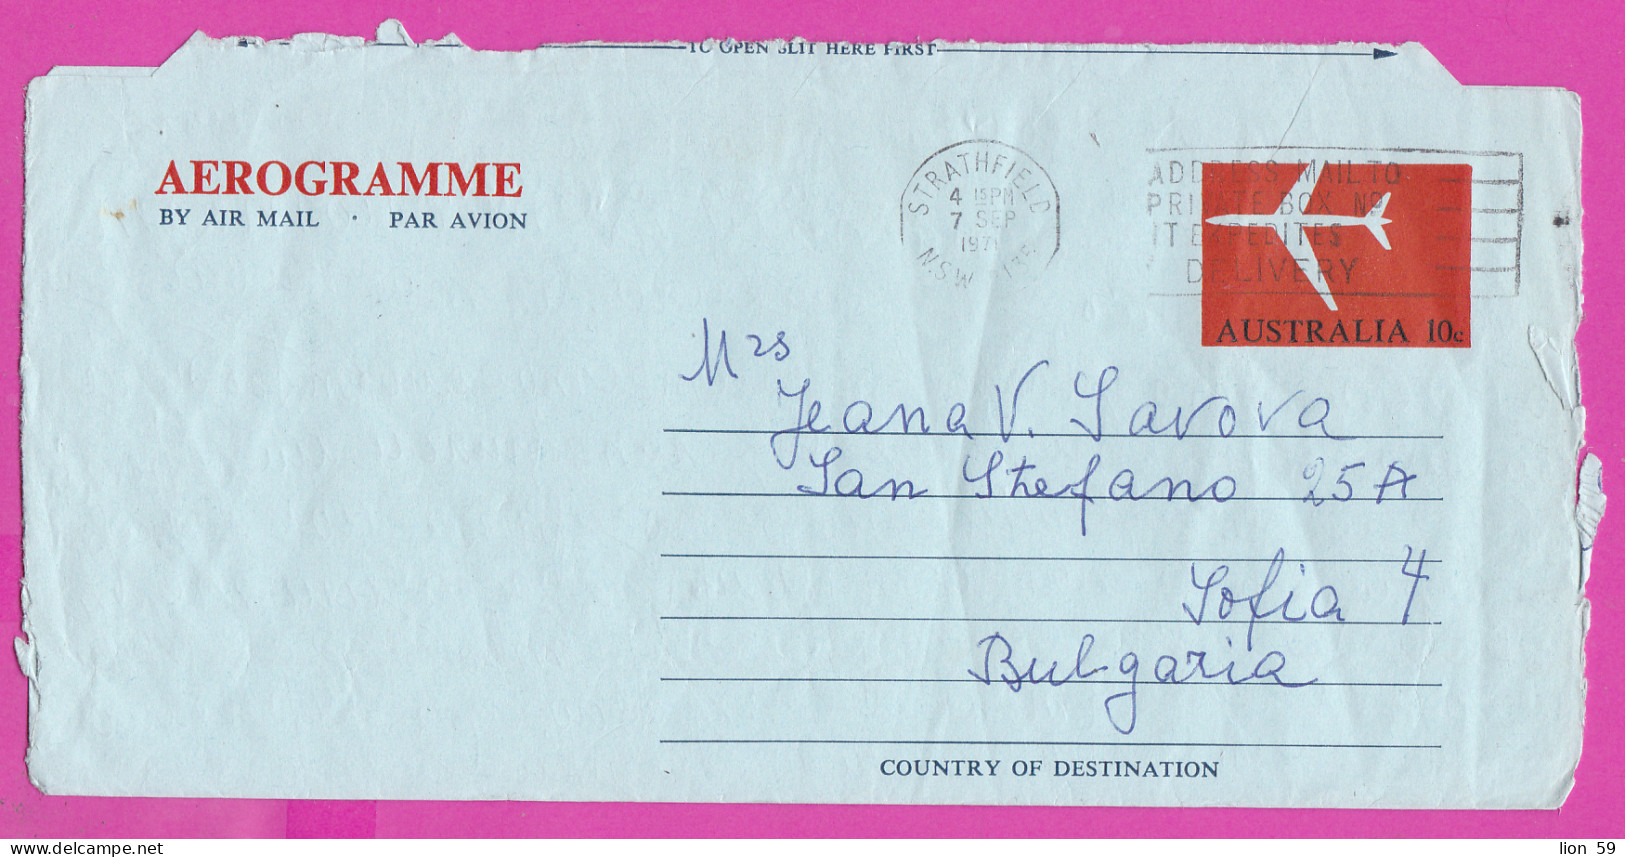 274793 / Australia Strathfield N.S.W. Aerogramme 1971 - 10c. Flamme Address Mail To Private Box No It Expedites Delivery - Luchtpostbladen